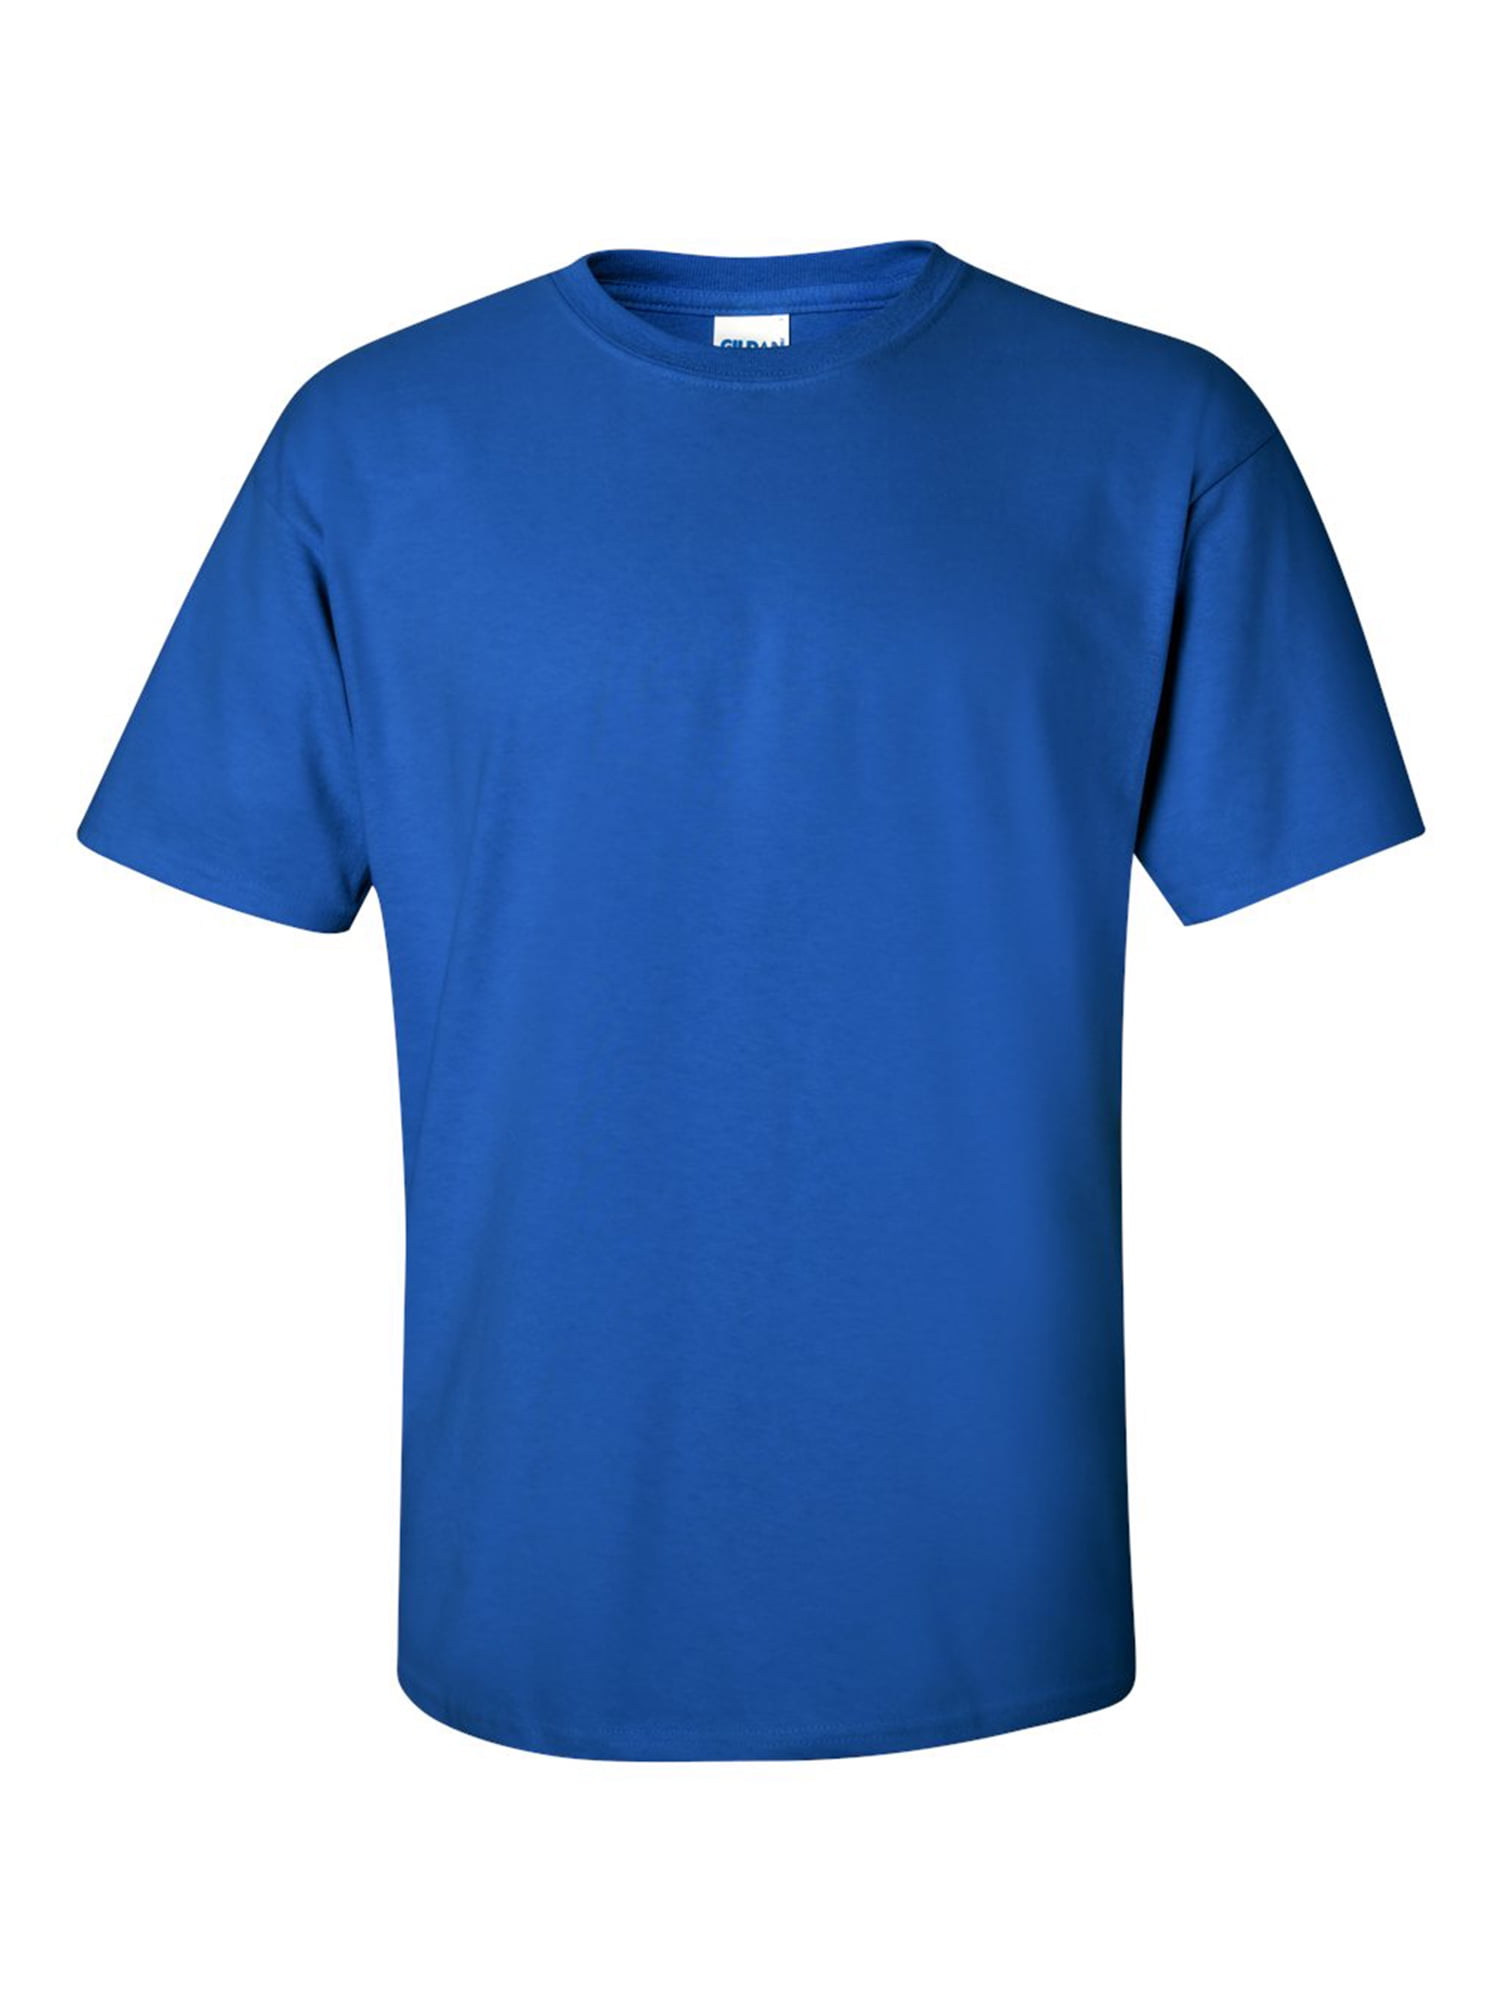 Royal Blue Shirt for Men - Gildan 2000 - Men T-Shirt Cotton Men Shirt ...